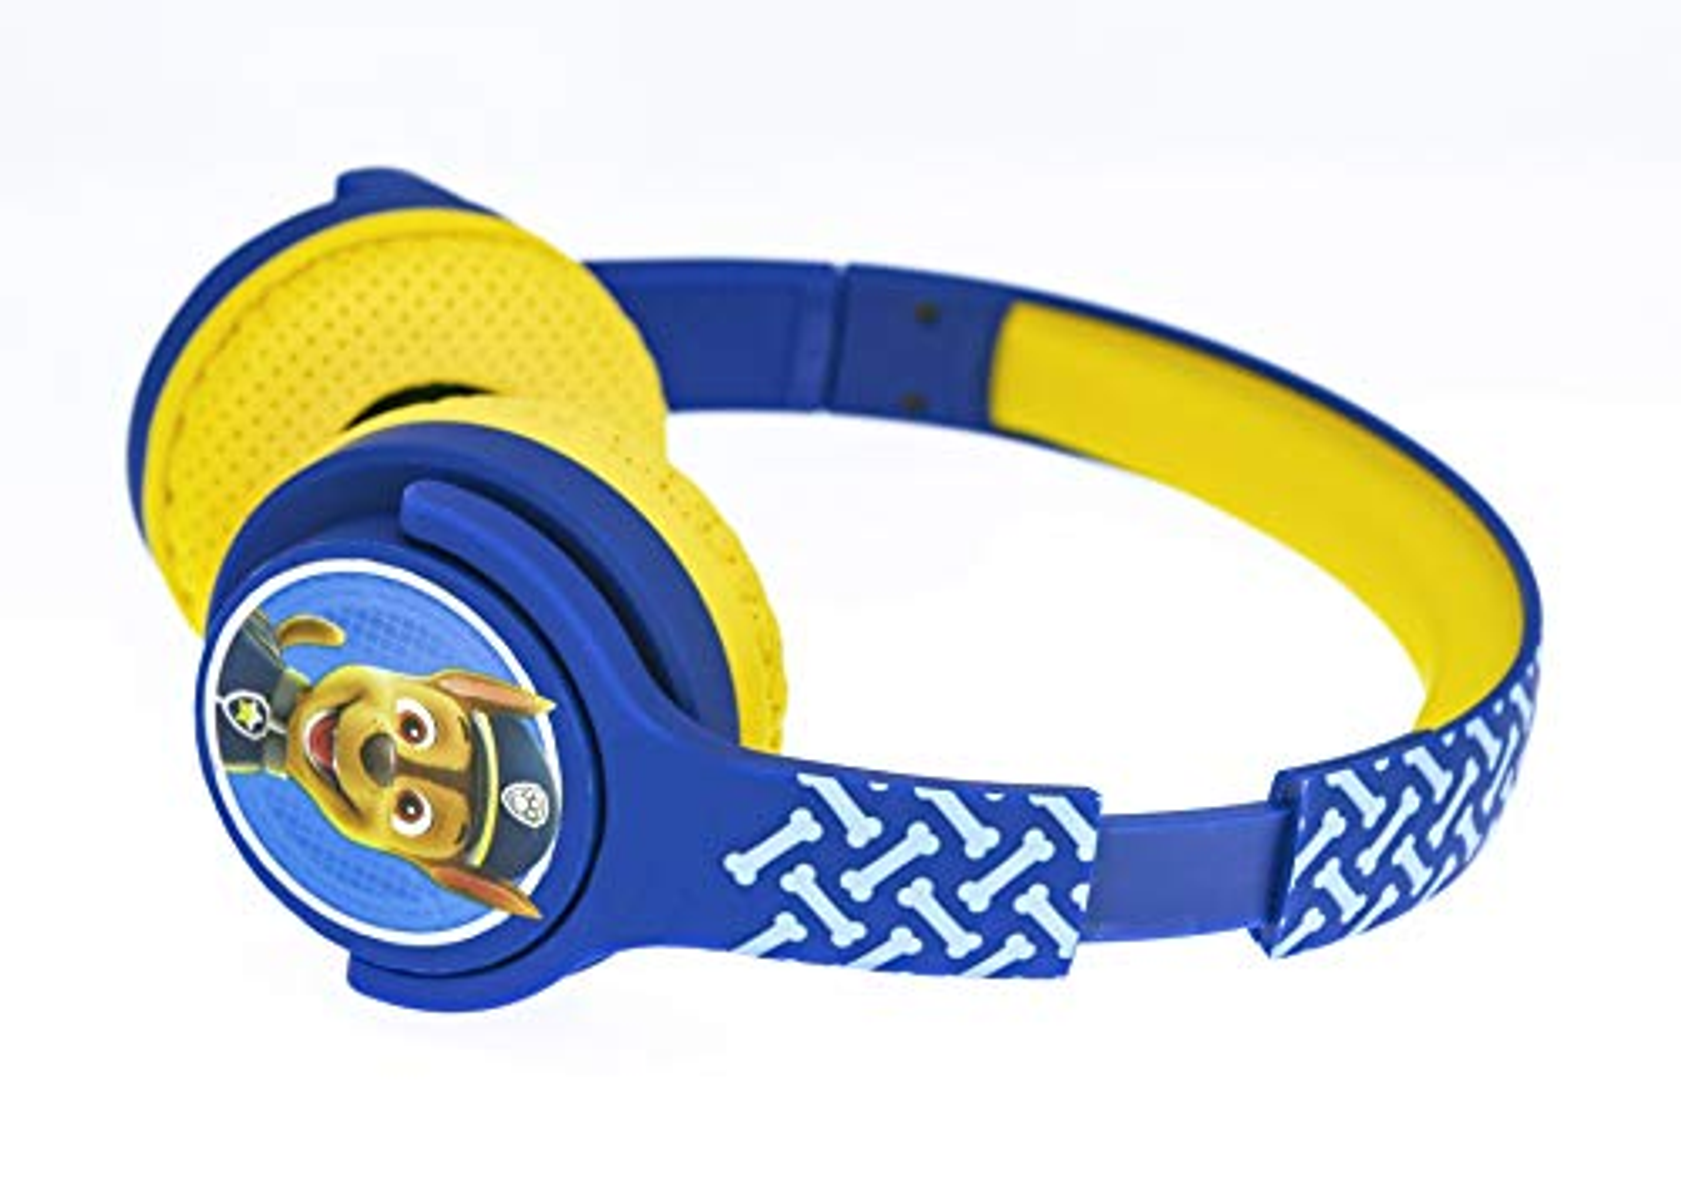 OTL On-ear Blau PATROL WRLS, KIDS PAW PAW724 CHASE Bluetooth Kopfhörer